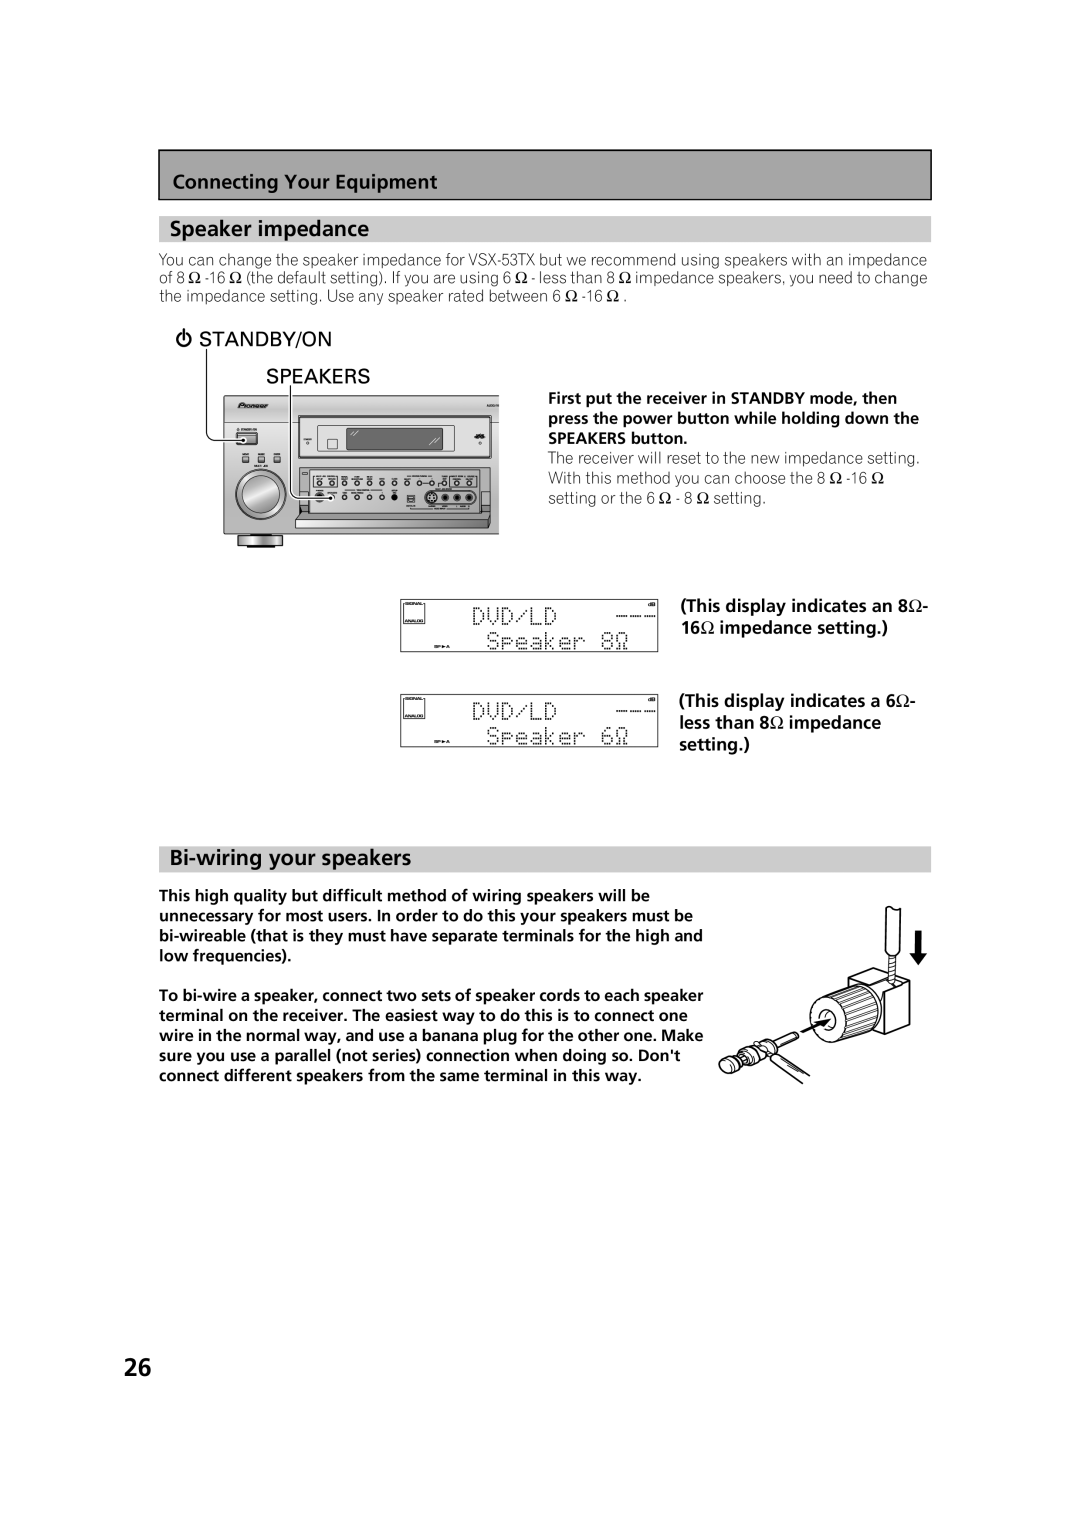 Pioneer VSX-53TX manual Speaker impedance, Bi-wiringyour speakers, Connecting Your Equipment 